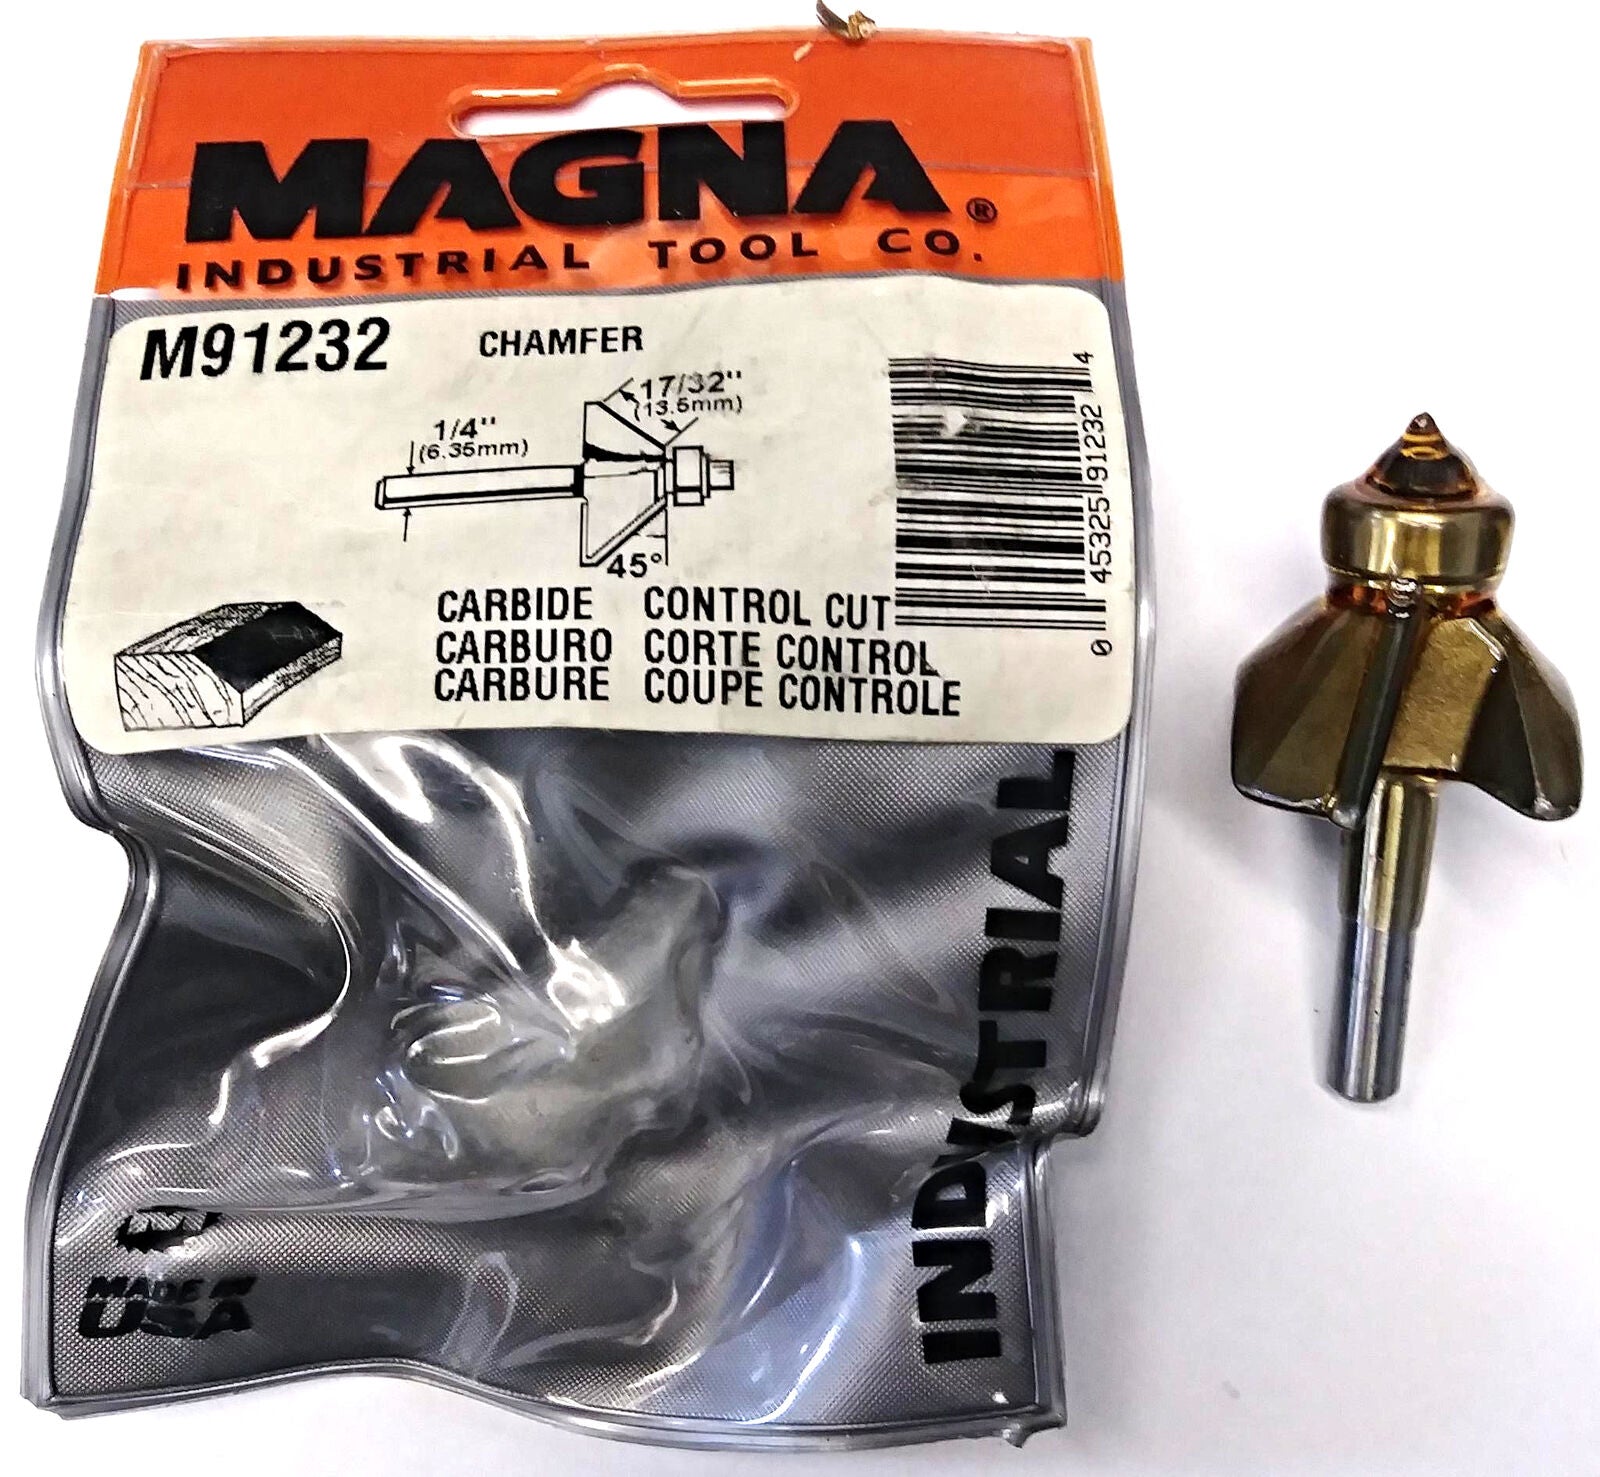 Magna M91232 45° x 17/32" Chamfer Router Bit 1/4" Shank USA